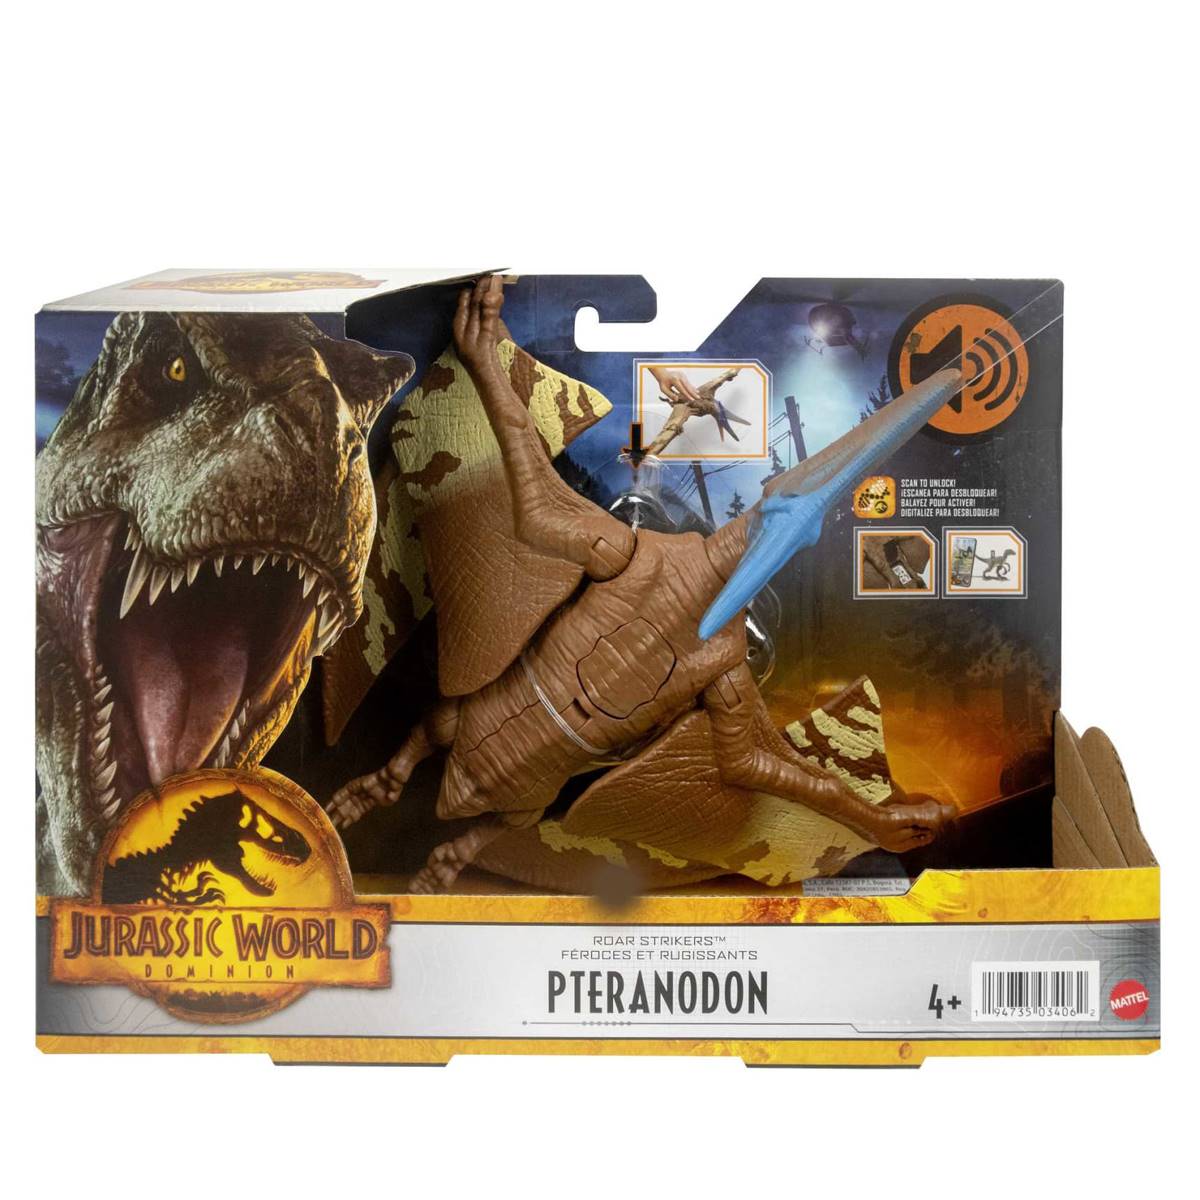 Jurassic World Roar Strikes Pterandon